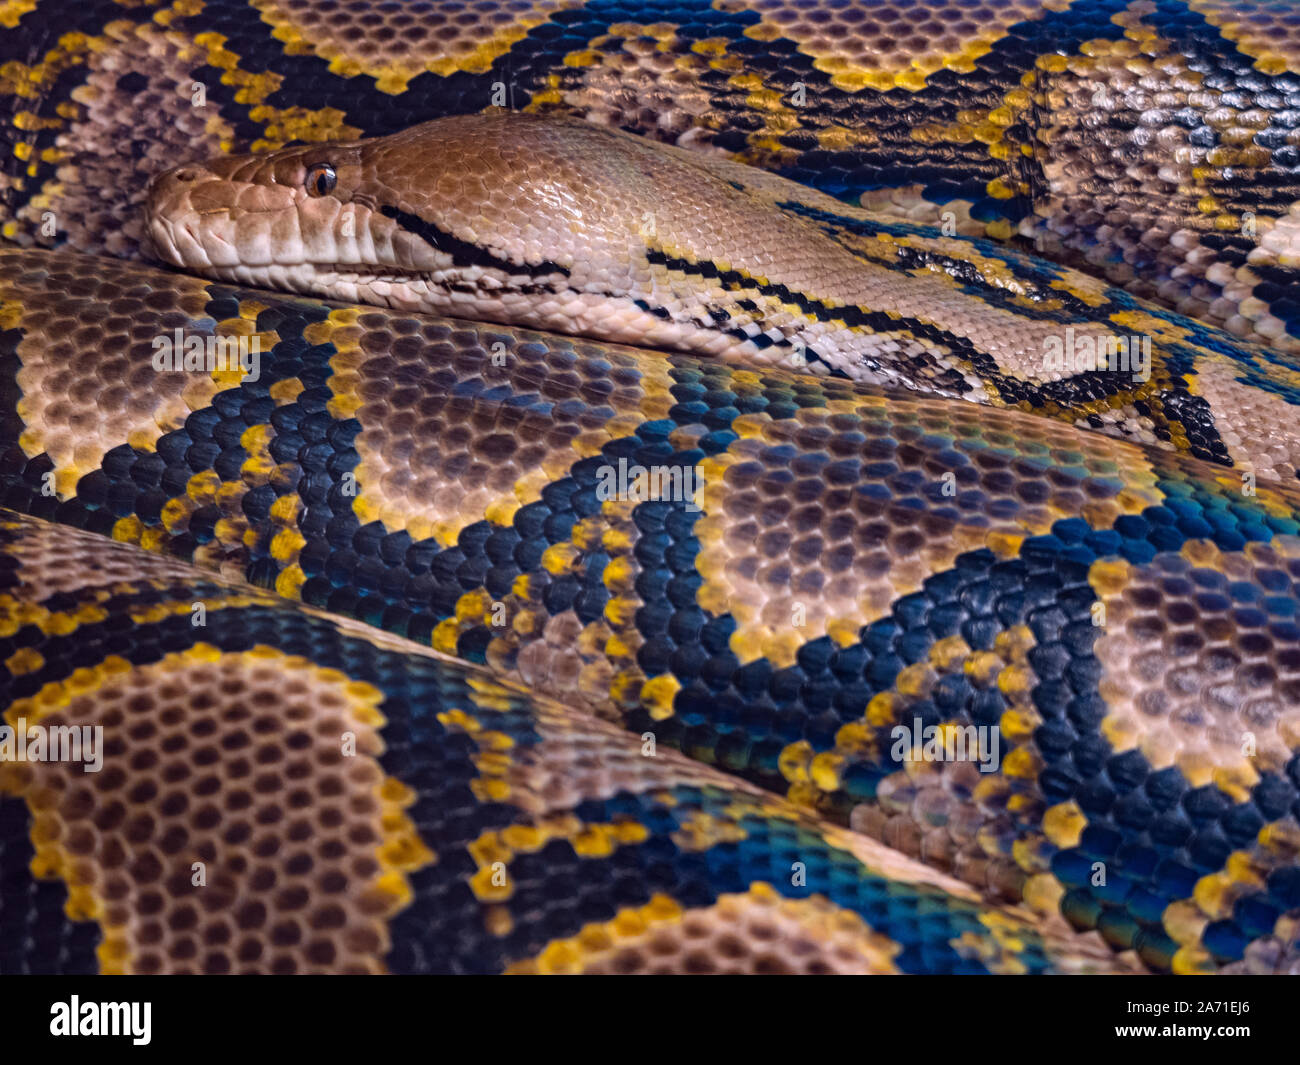 Netzpython Python reticulatus Nahaufnahme der Haut Muster Stockfoto